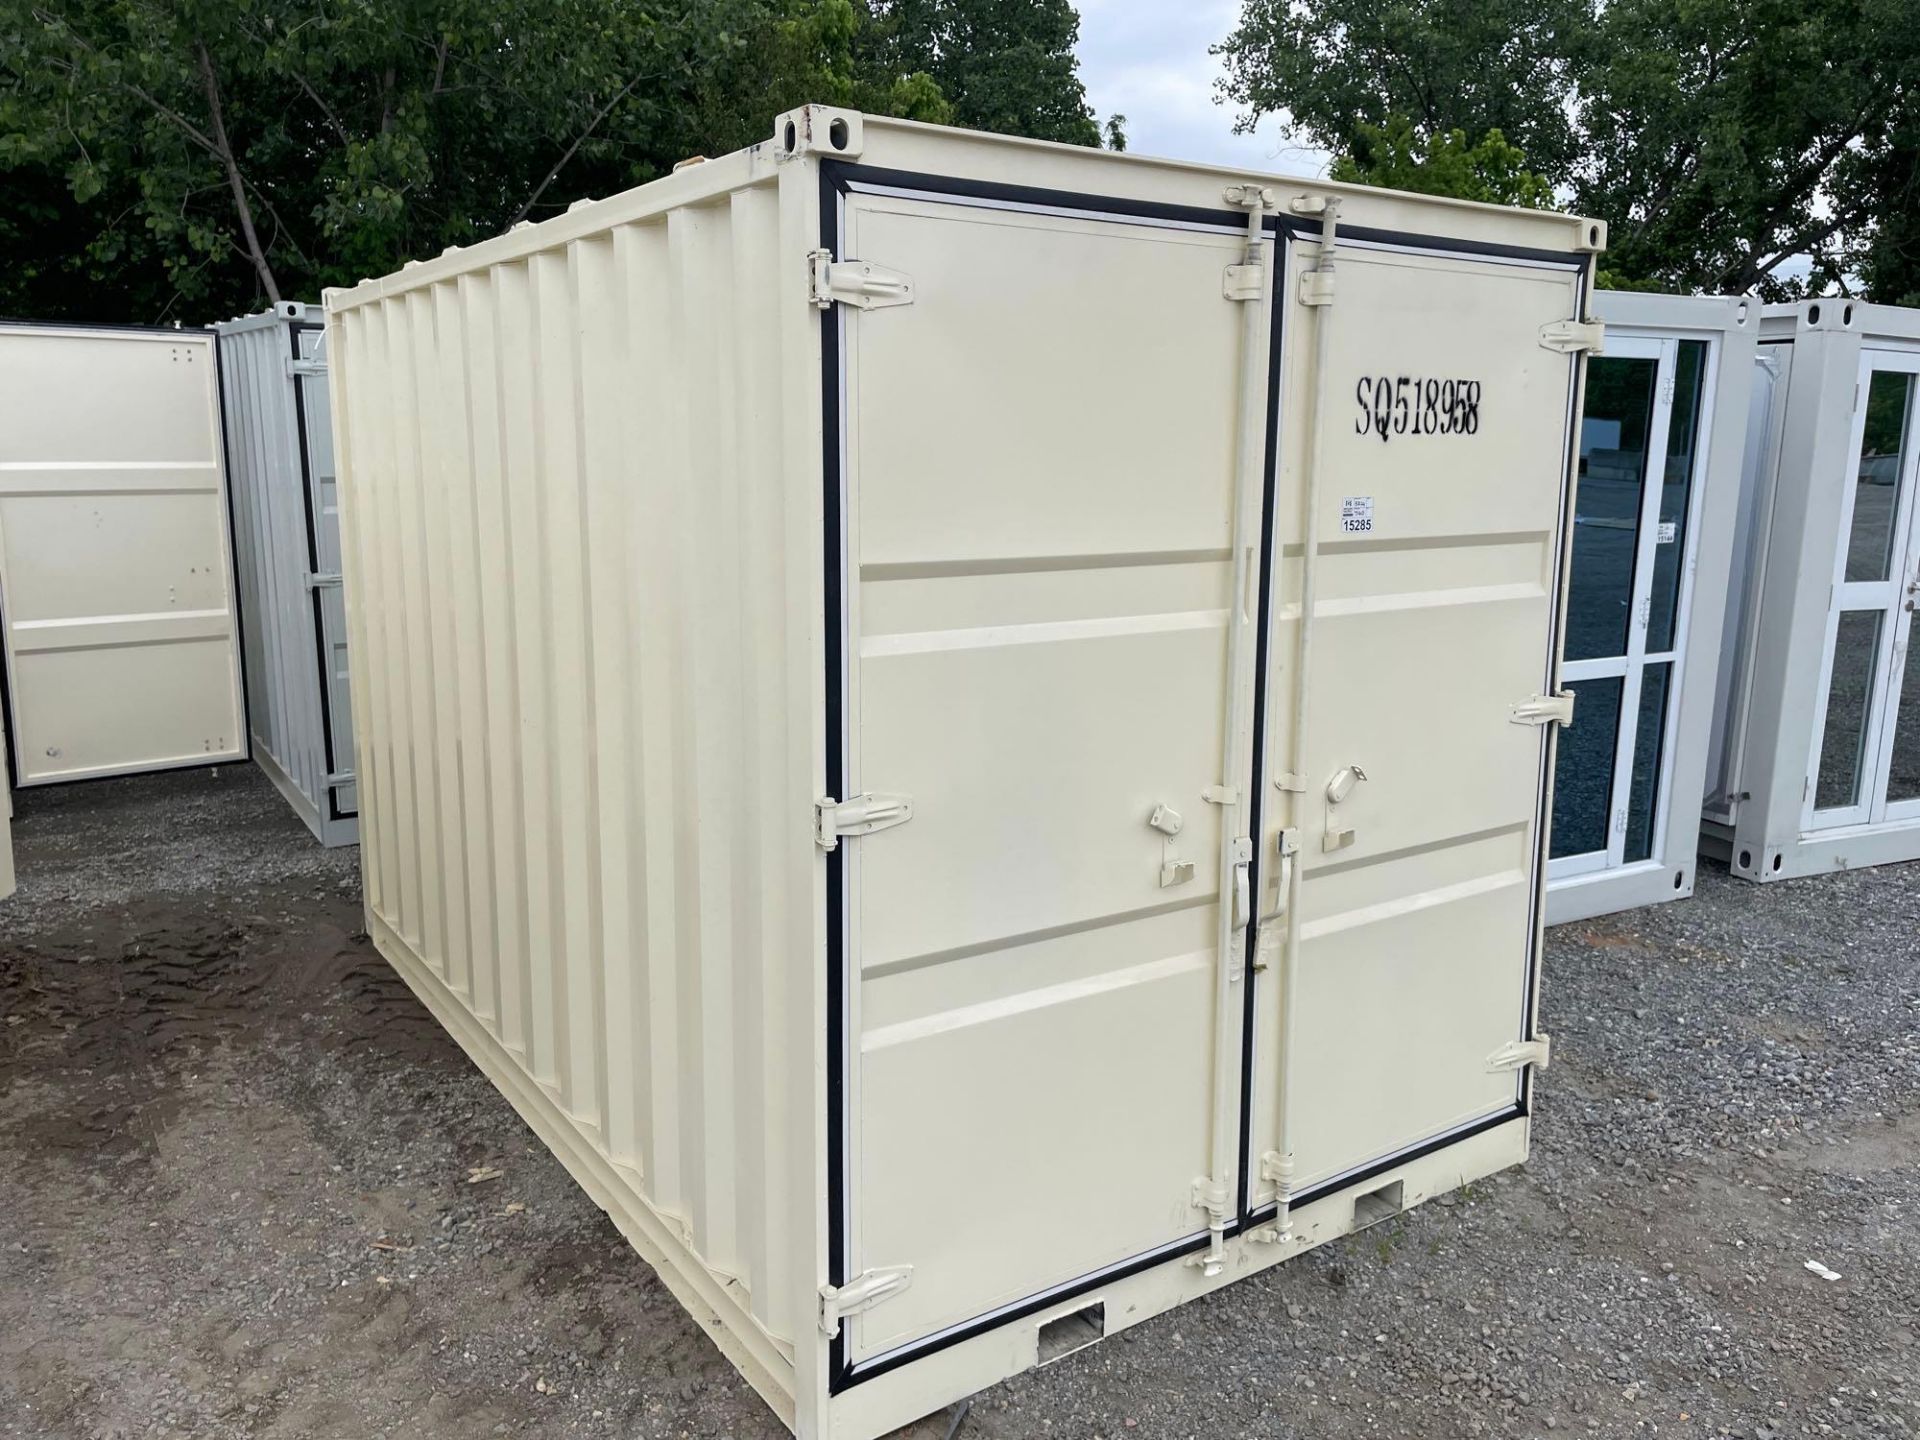 12' Storage Container